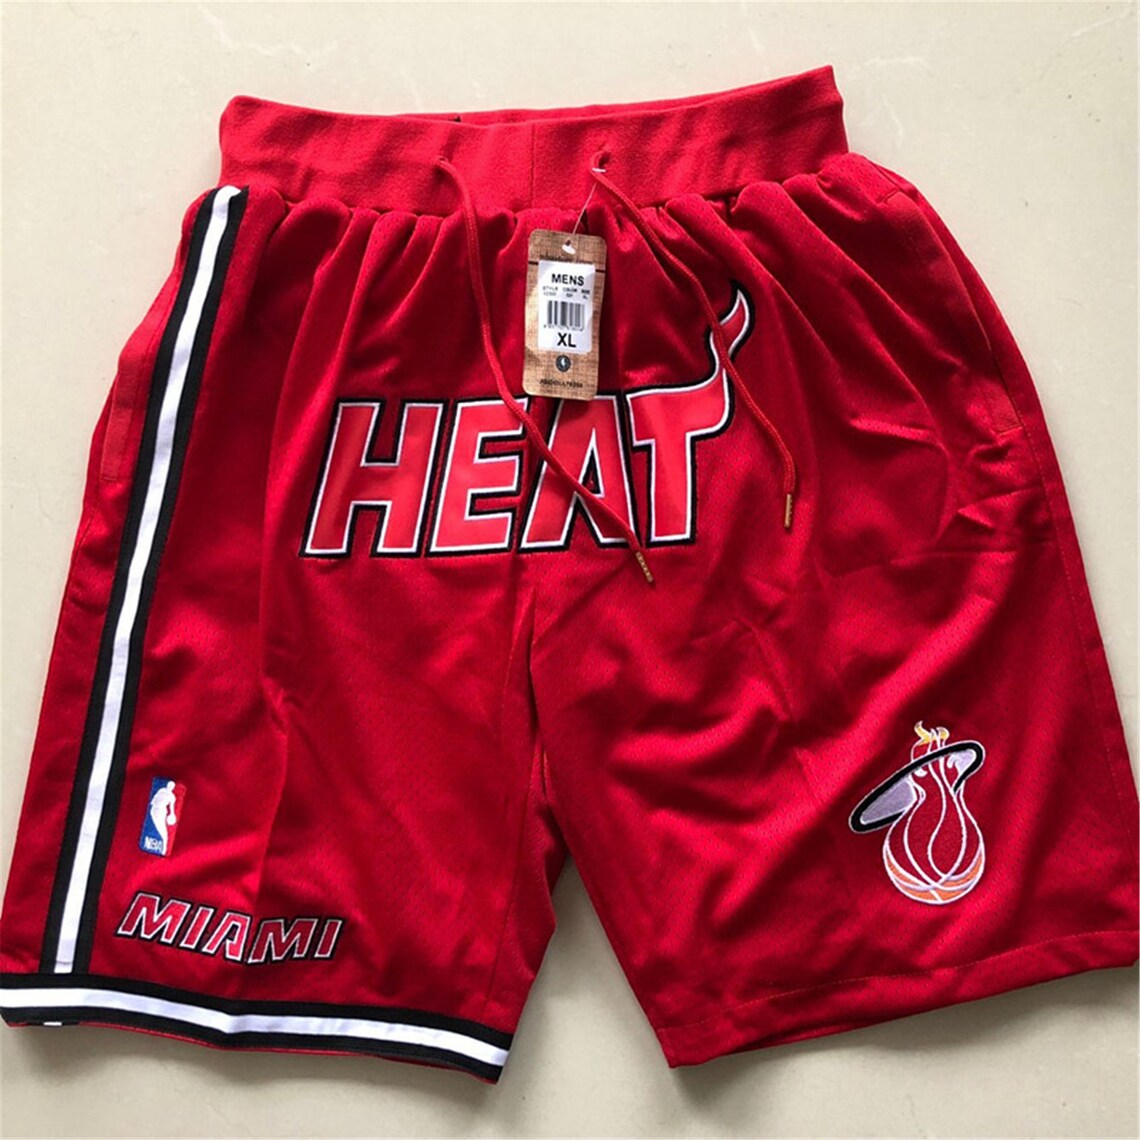 Heat basketball pants all-star basketball pants NBA | Etsy